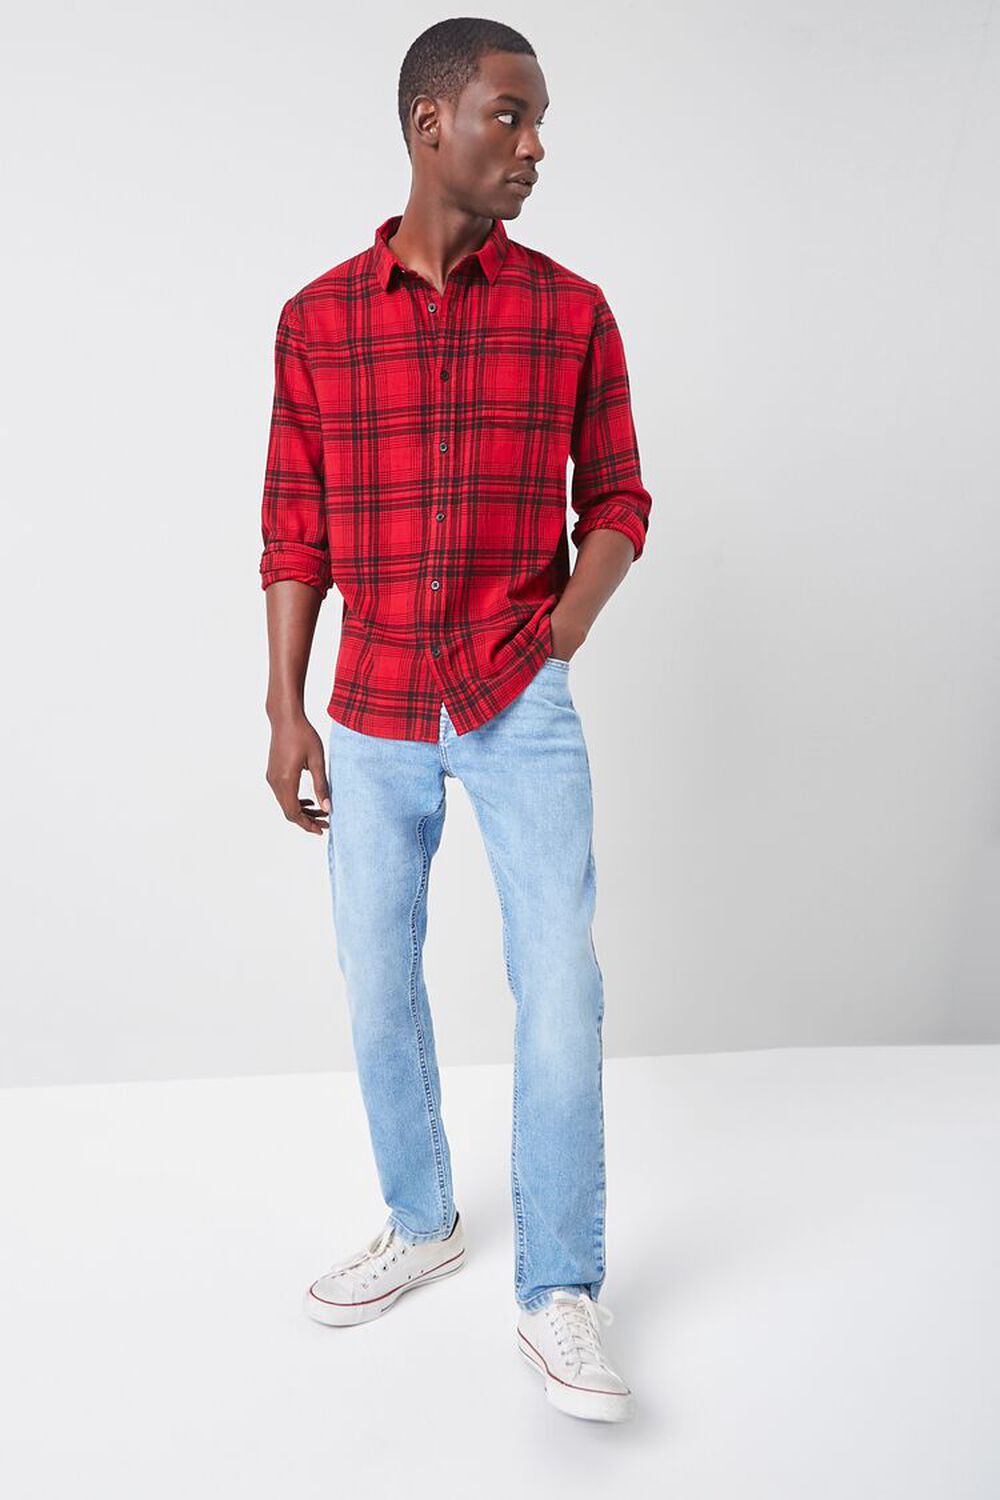 MEDIUM DENIM Basic Slim-Fit Jeans, image 1